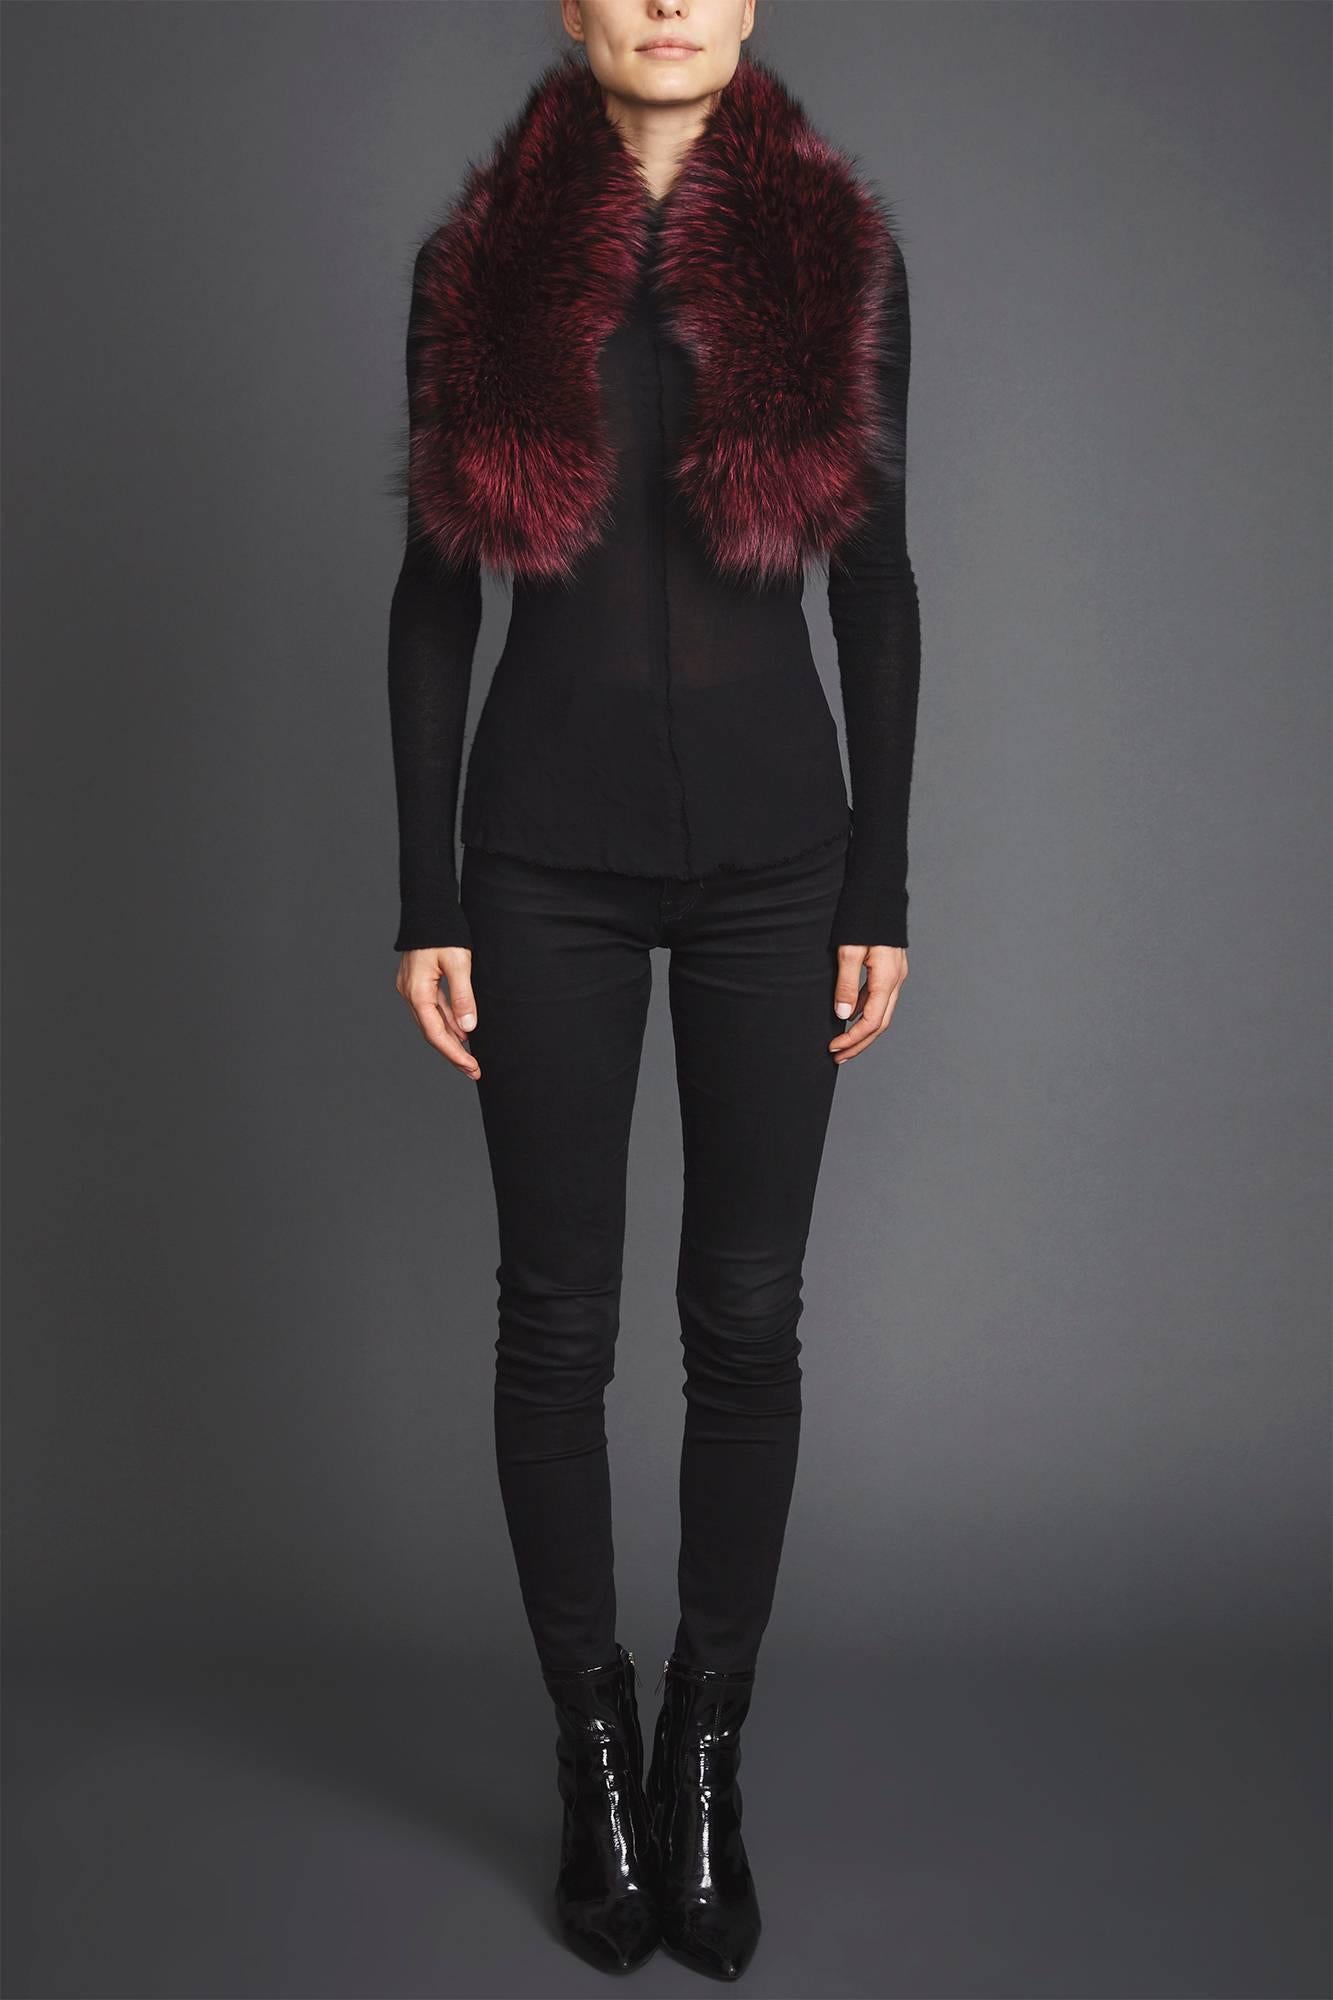 Women's or Men's Verheyen London Lapel Cross-through Collar in Soft Ruby Fox Fur - Brand New 